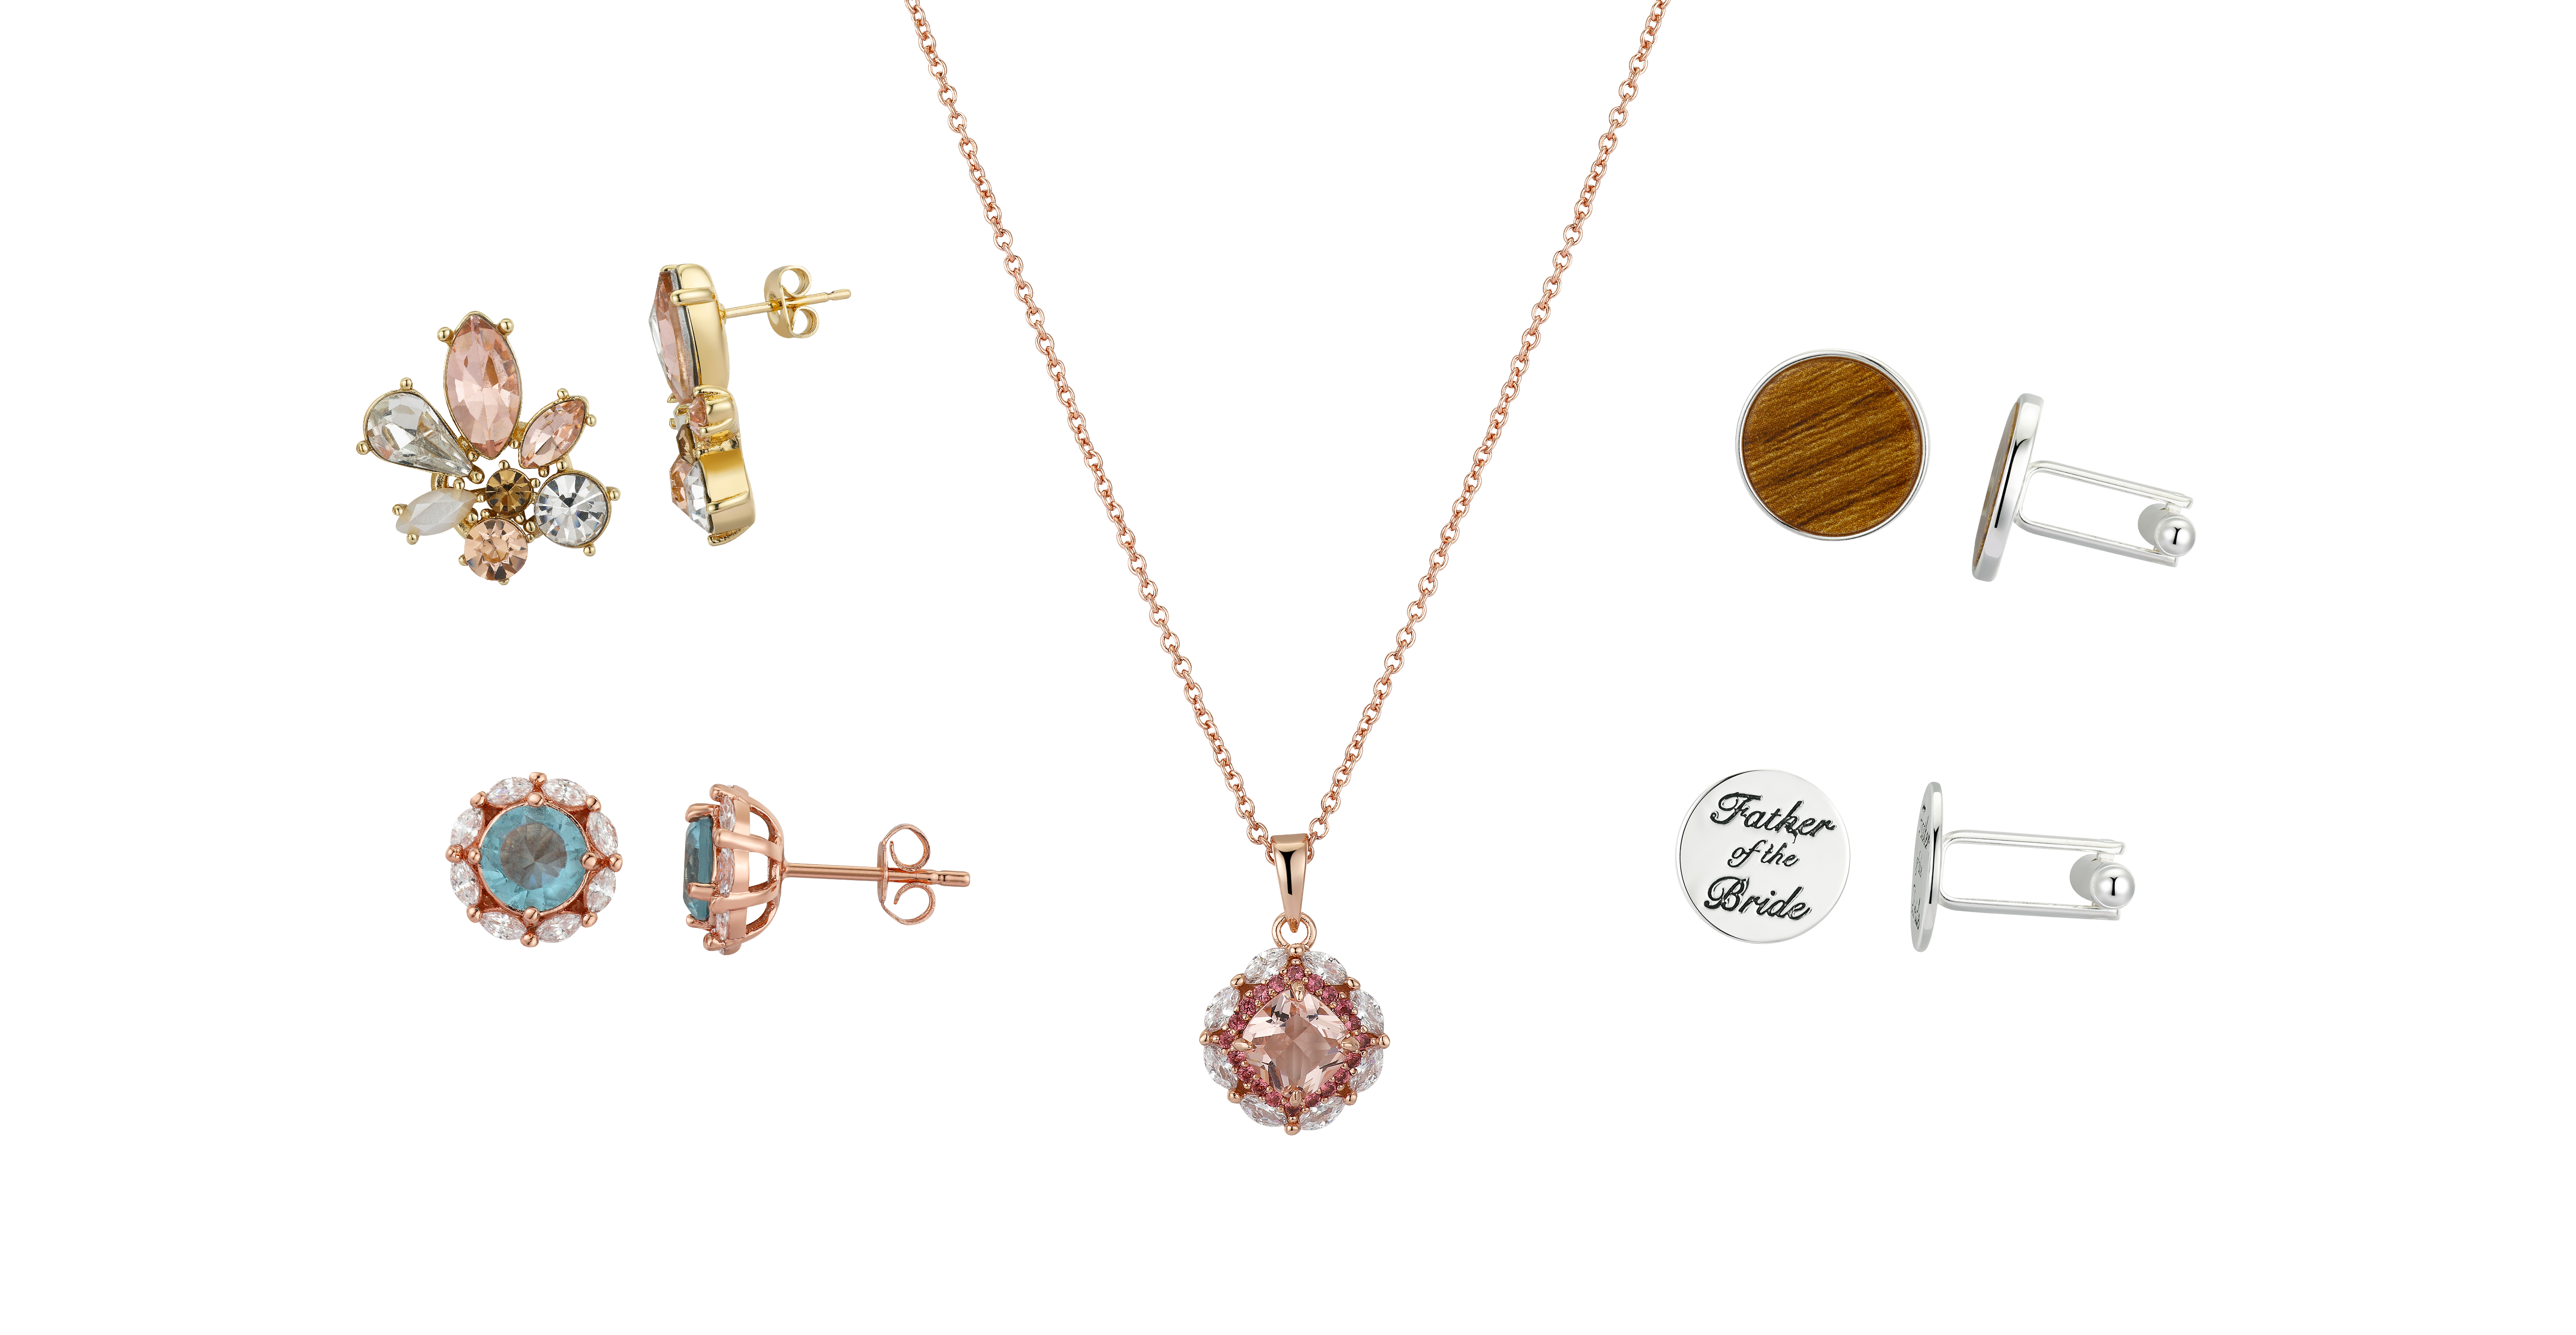 David Tutera的珠宝拼贴包括华丽的吊坠，袖扣和耳环。